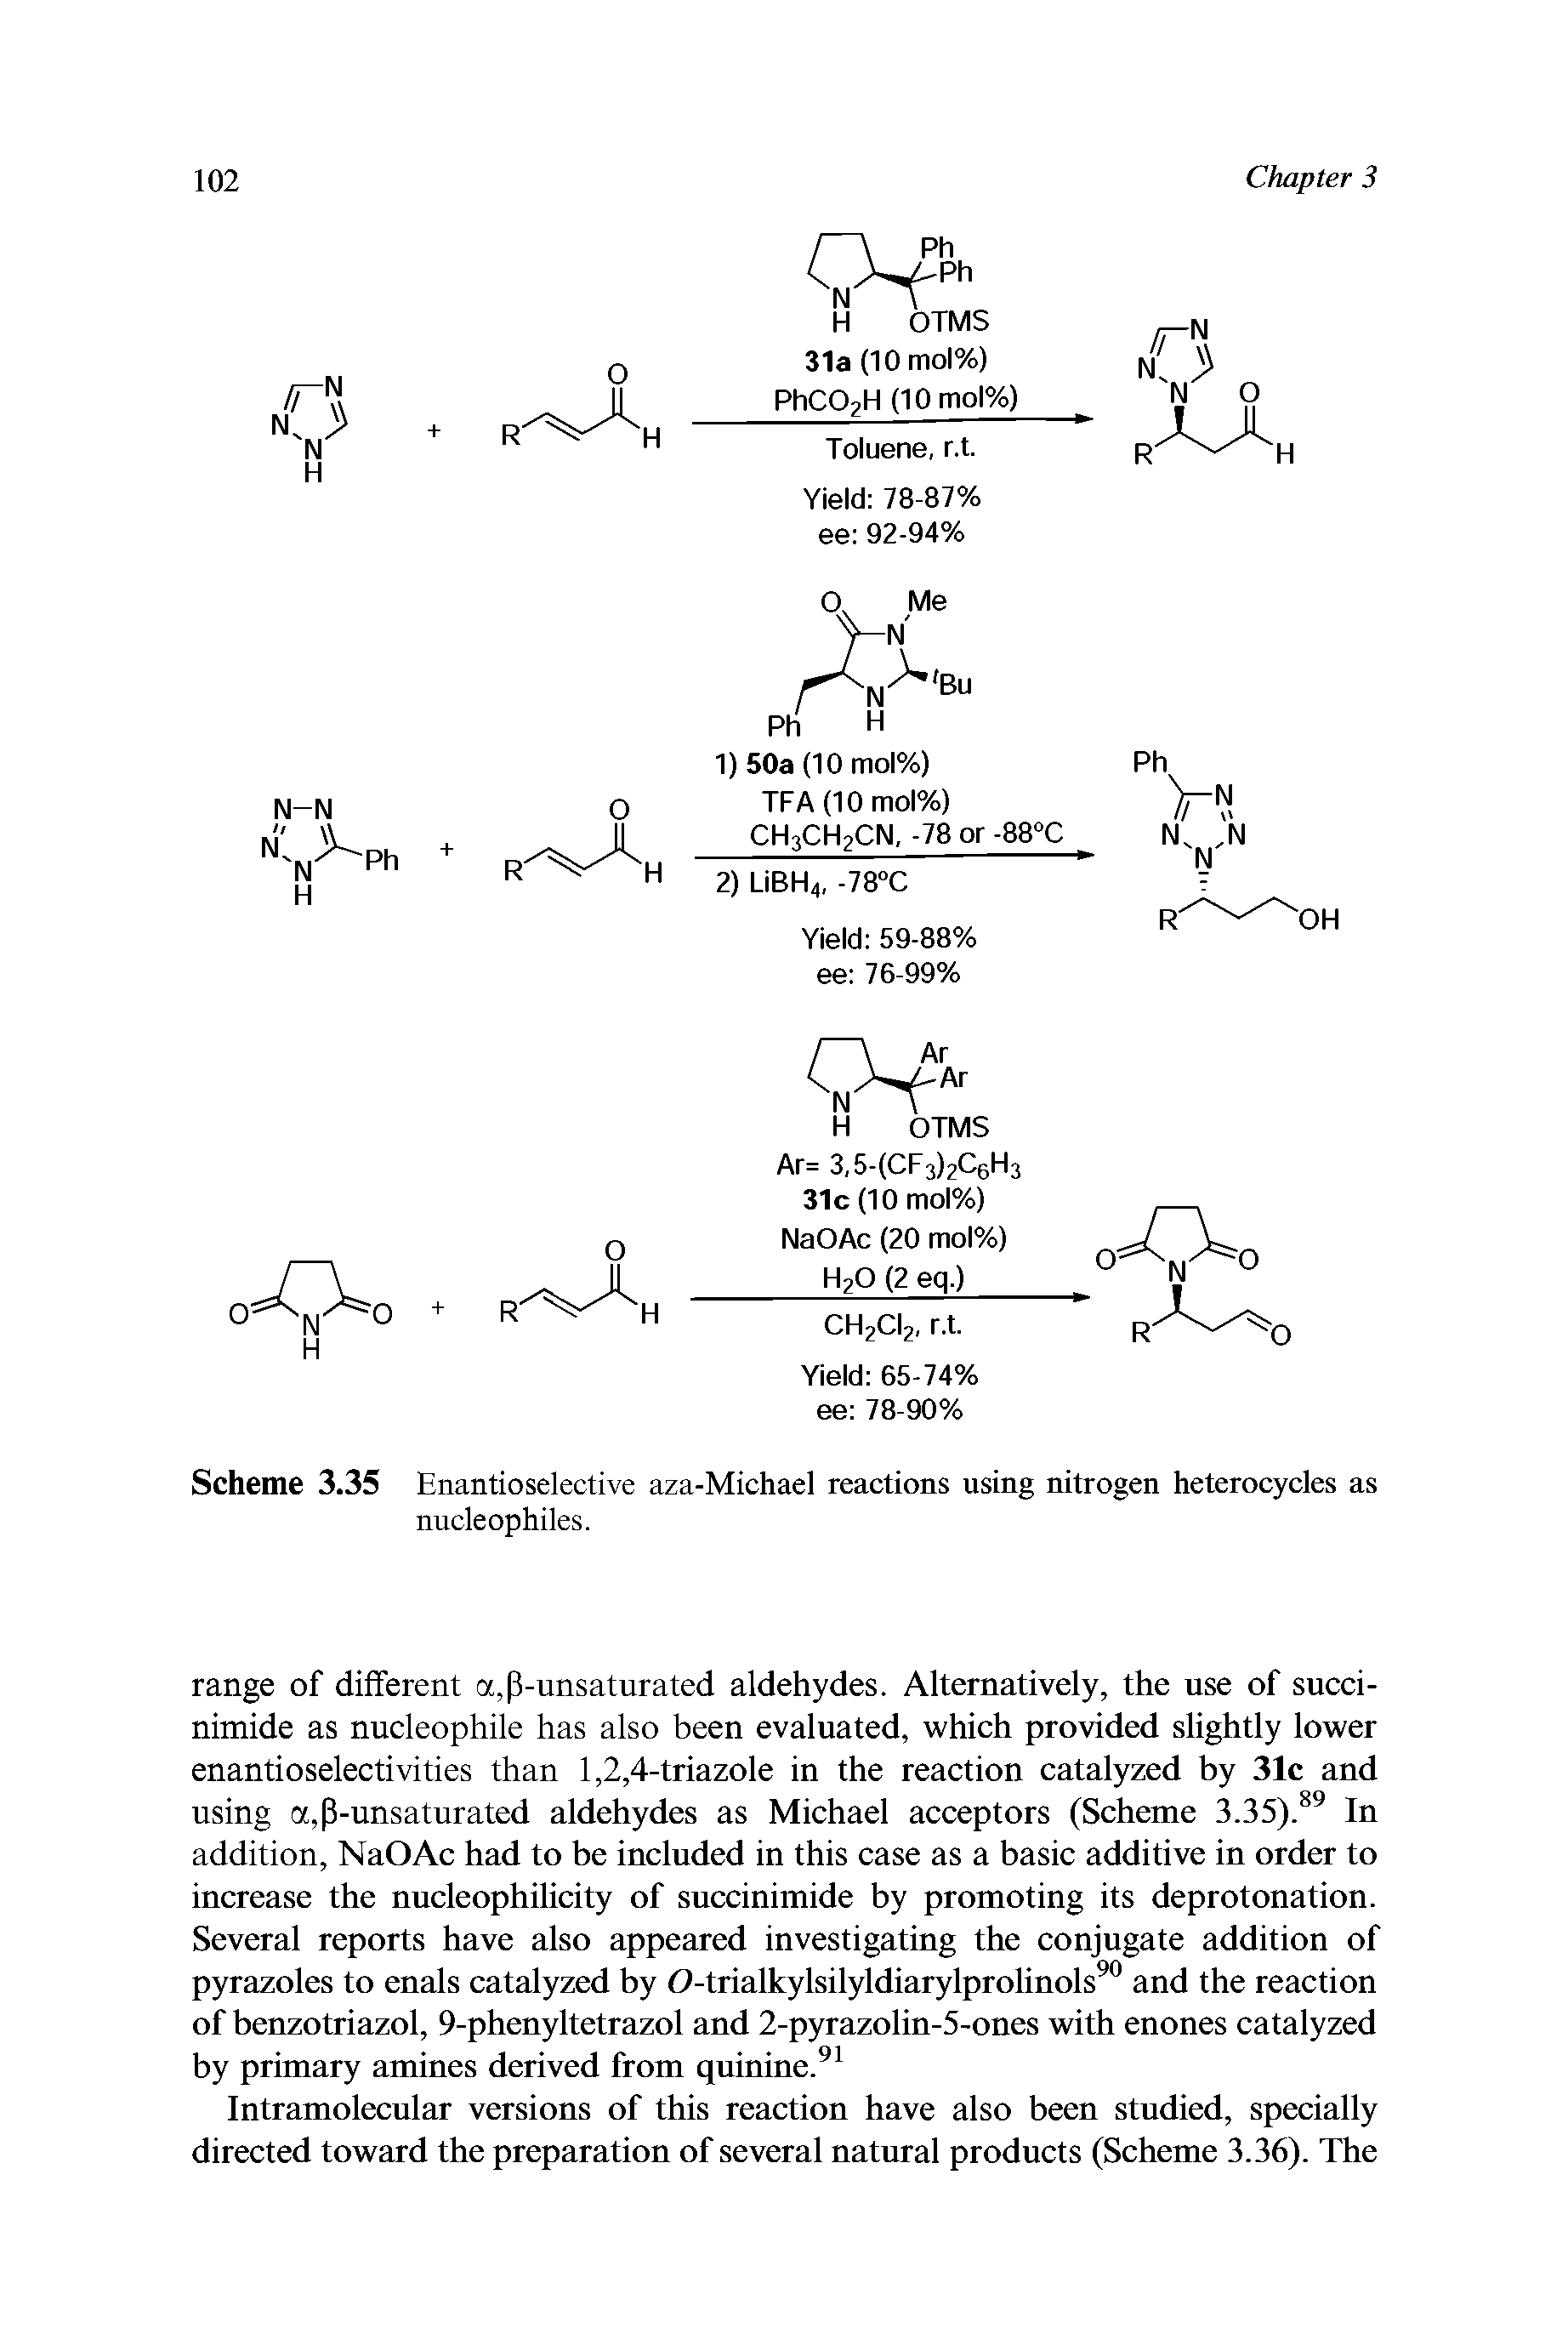 Scheme 3.35 Enantioselective aza-Michael reactions using nitrogen heterocycles as nucleophiles.